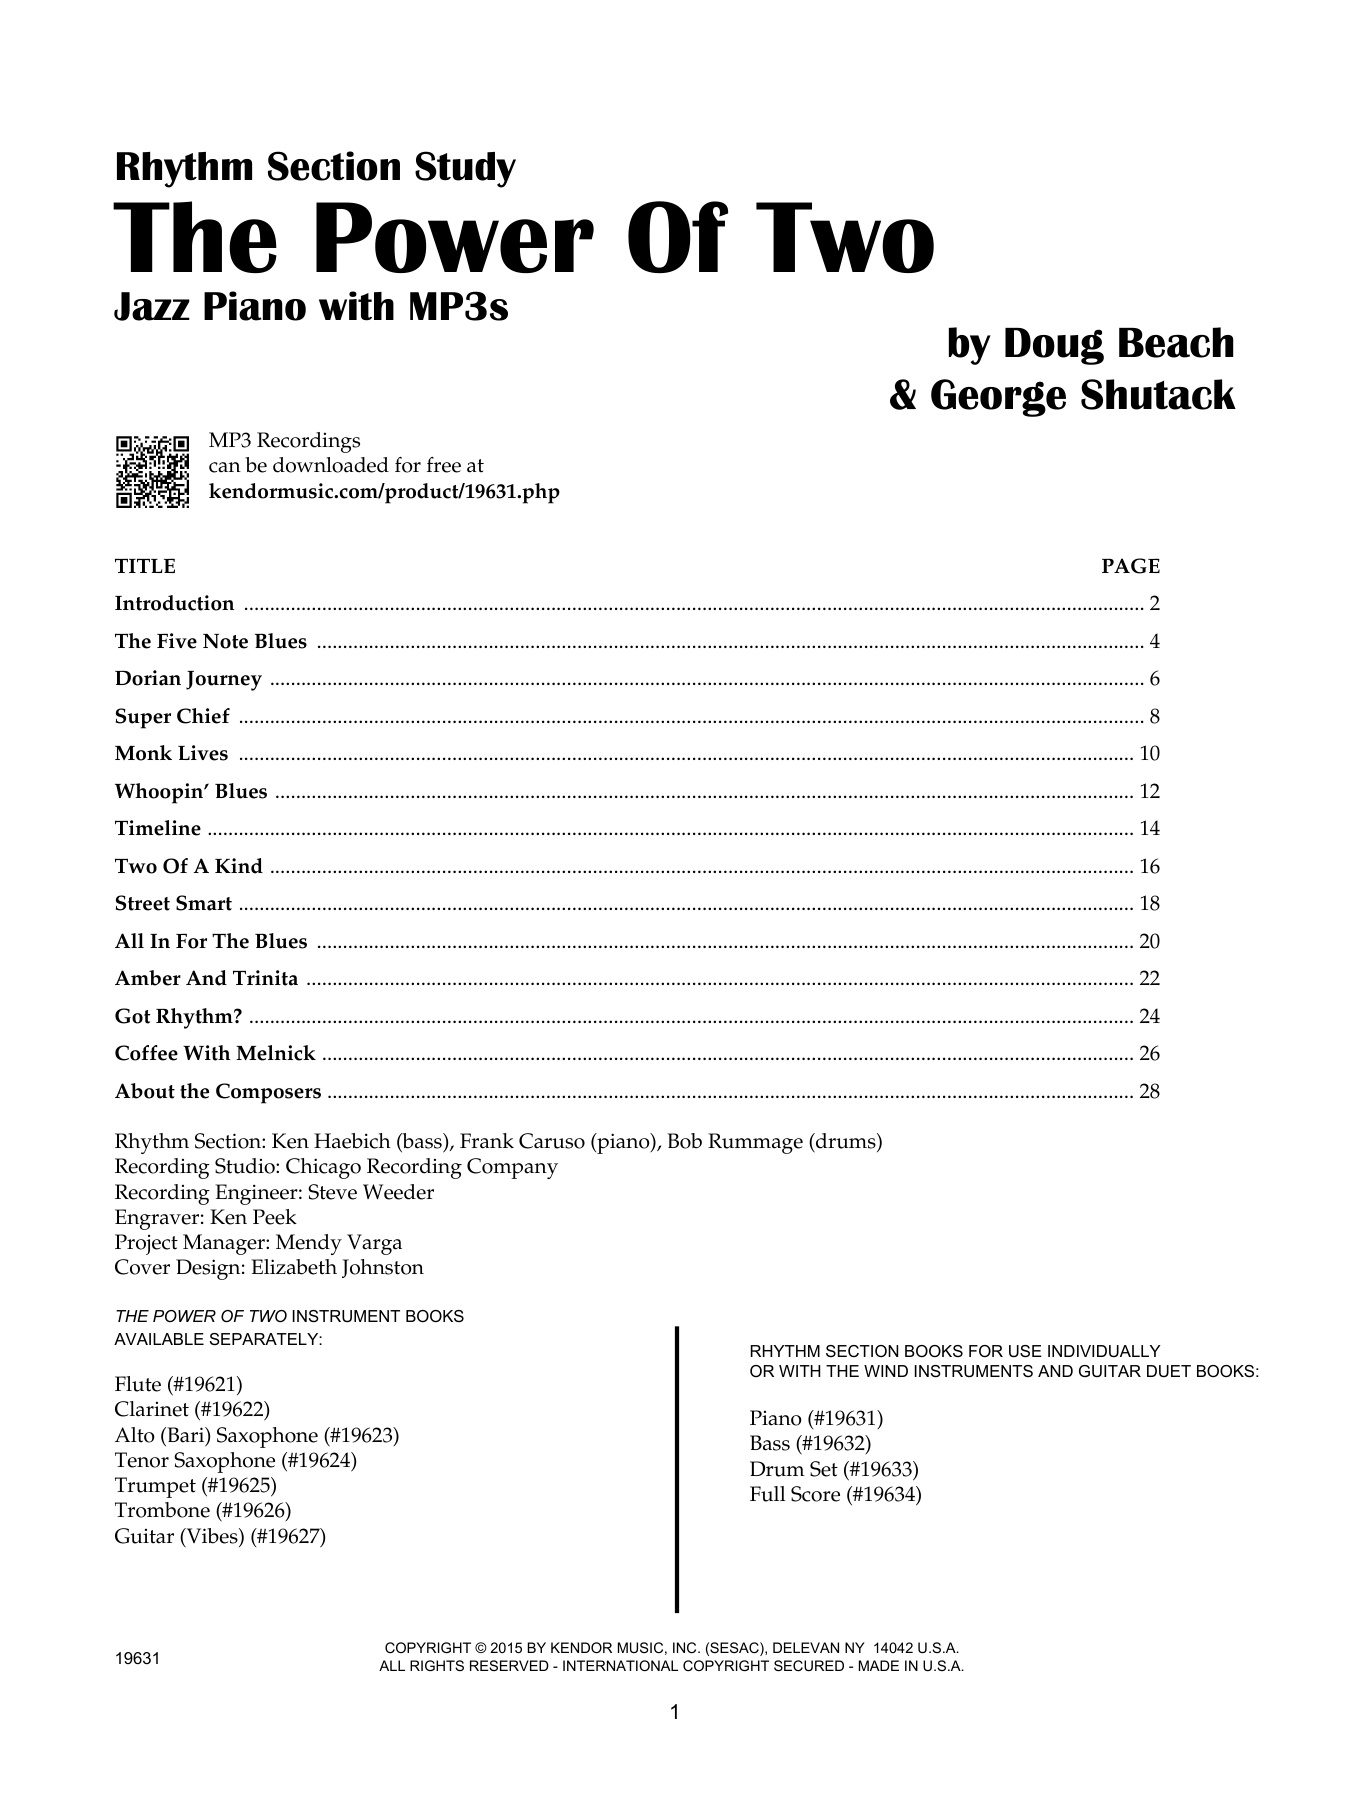 Download Doug Beach & George Shutack The Power Of Two - Piano Sheet Music